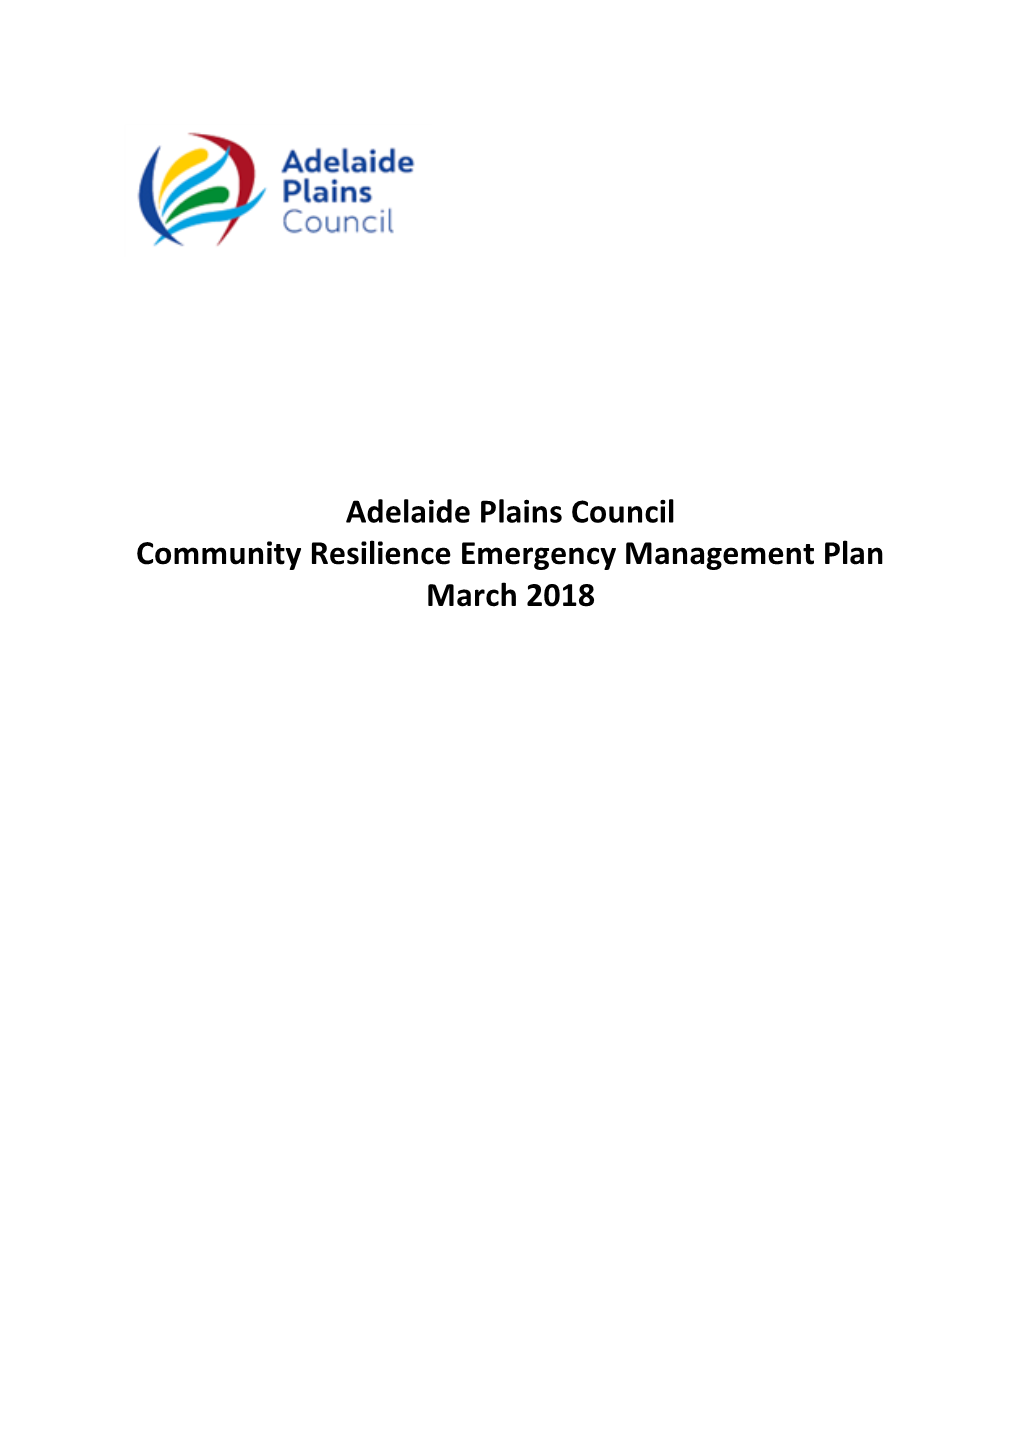 Community Emergency Management Plan